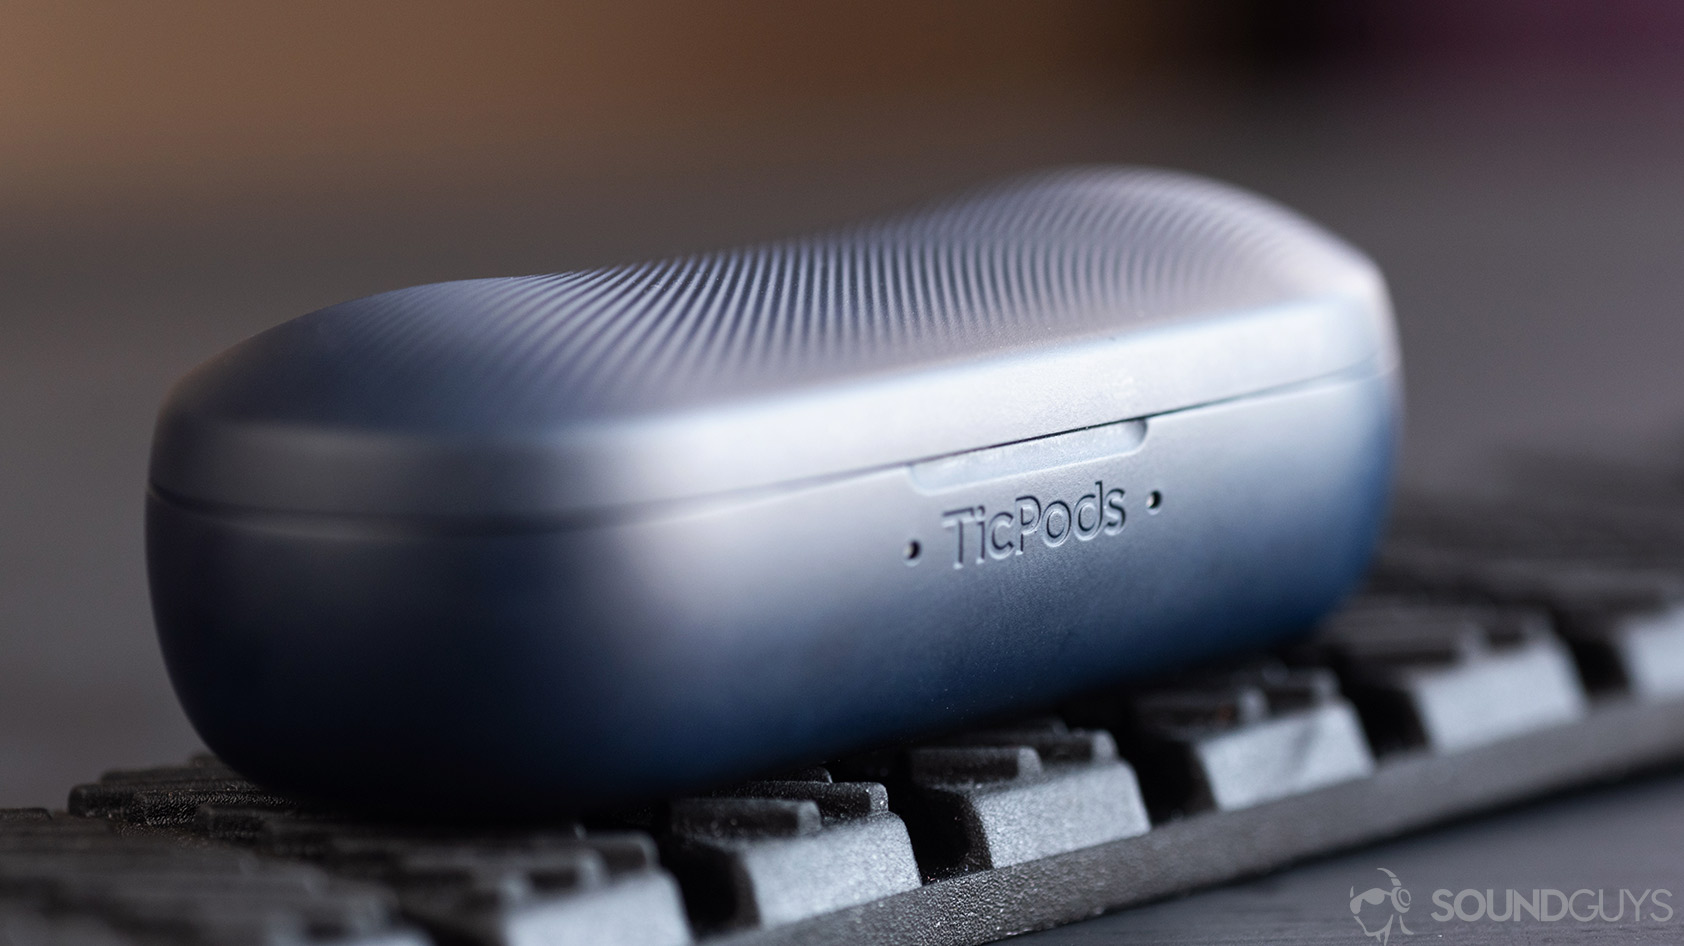 Mobvoi Ticpods 2 Pro True无线耳塞充电案例，带有TICPODS名称。